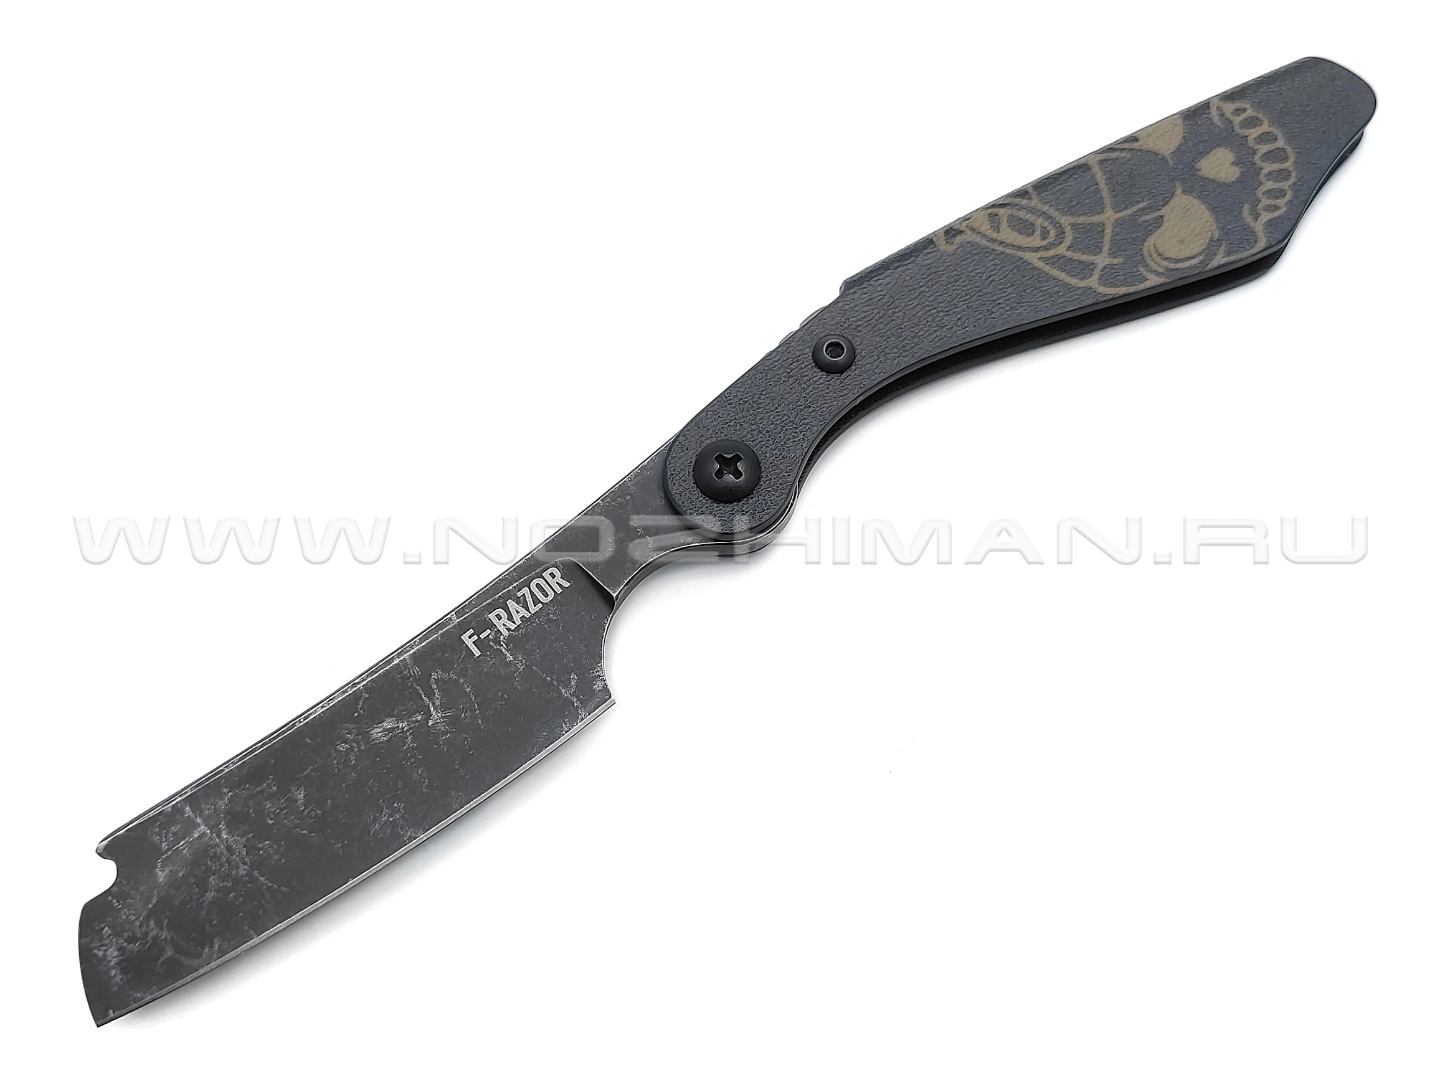 Brutalica нож-бритва F-Razor Black, сталь X50CrMov15 blackwash, рукоять Kydex